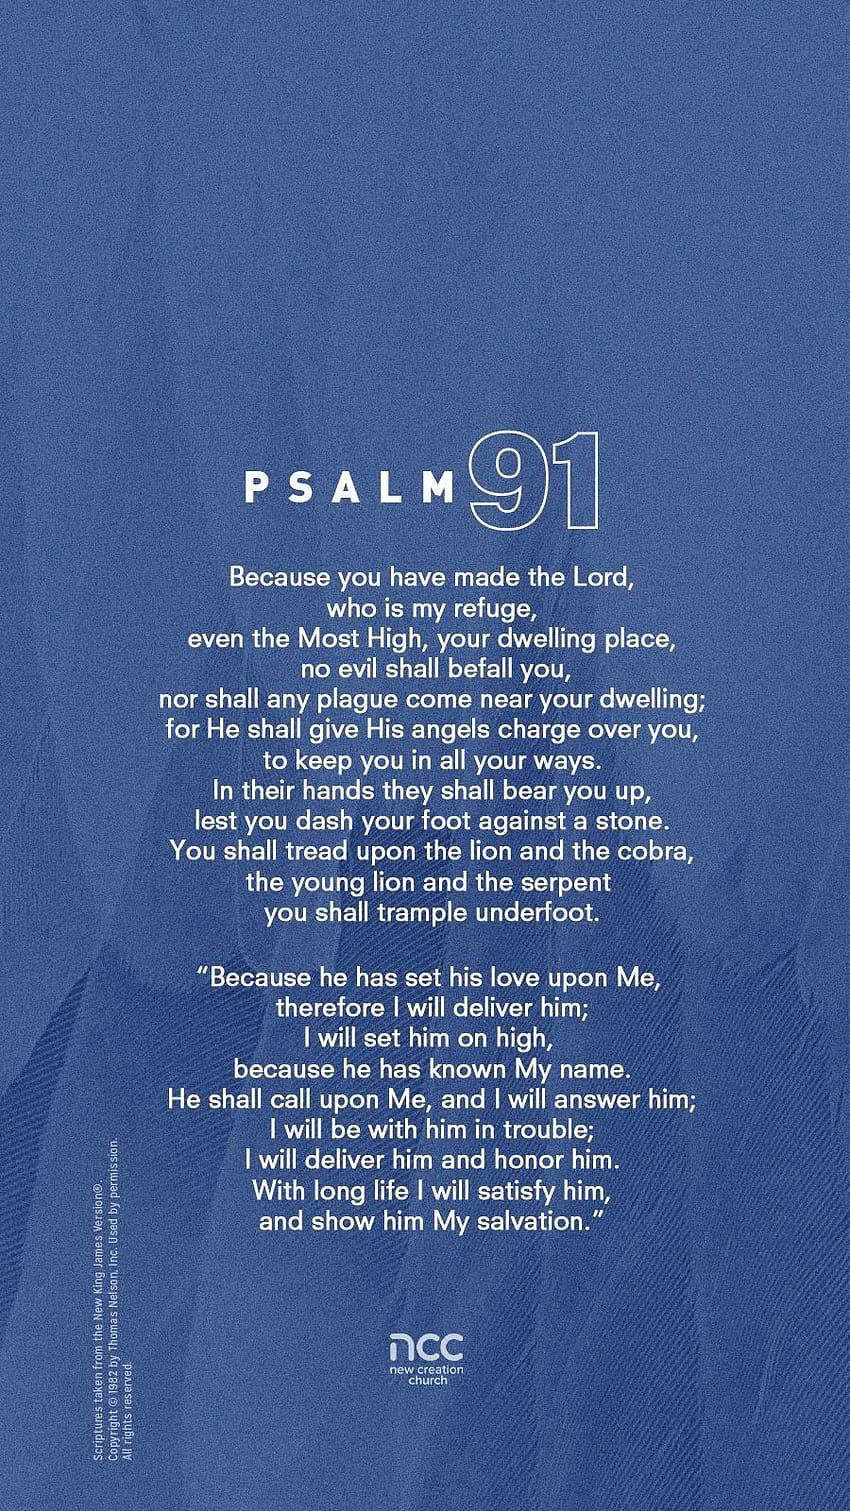 Mazmur 91 wallpaper ponsel HD